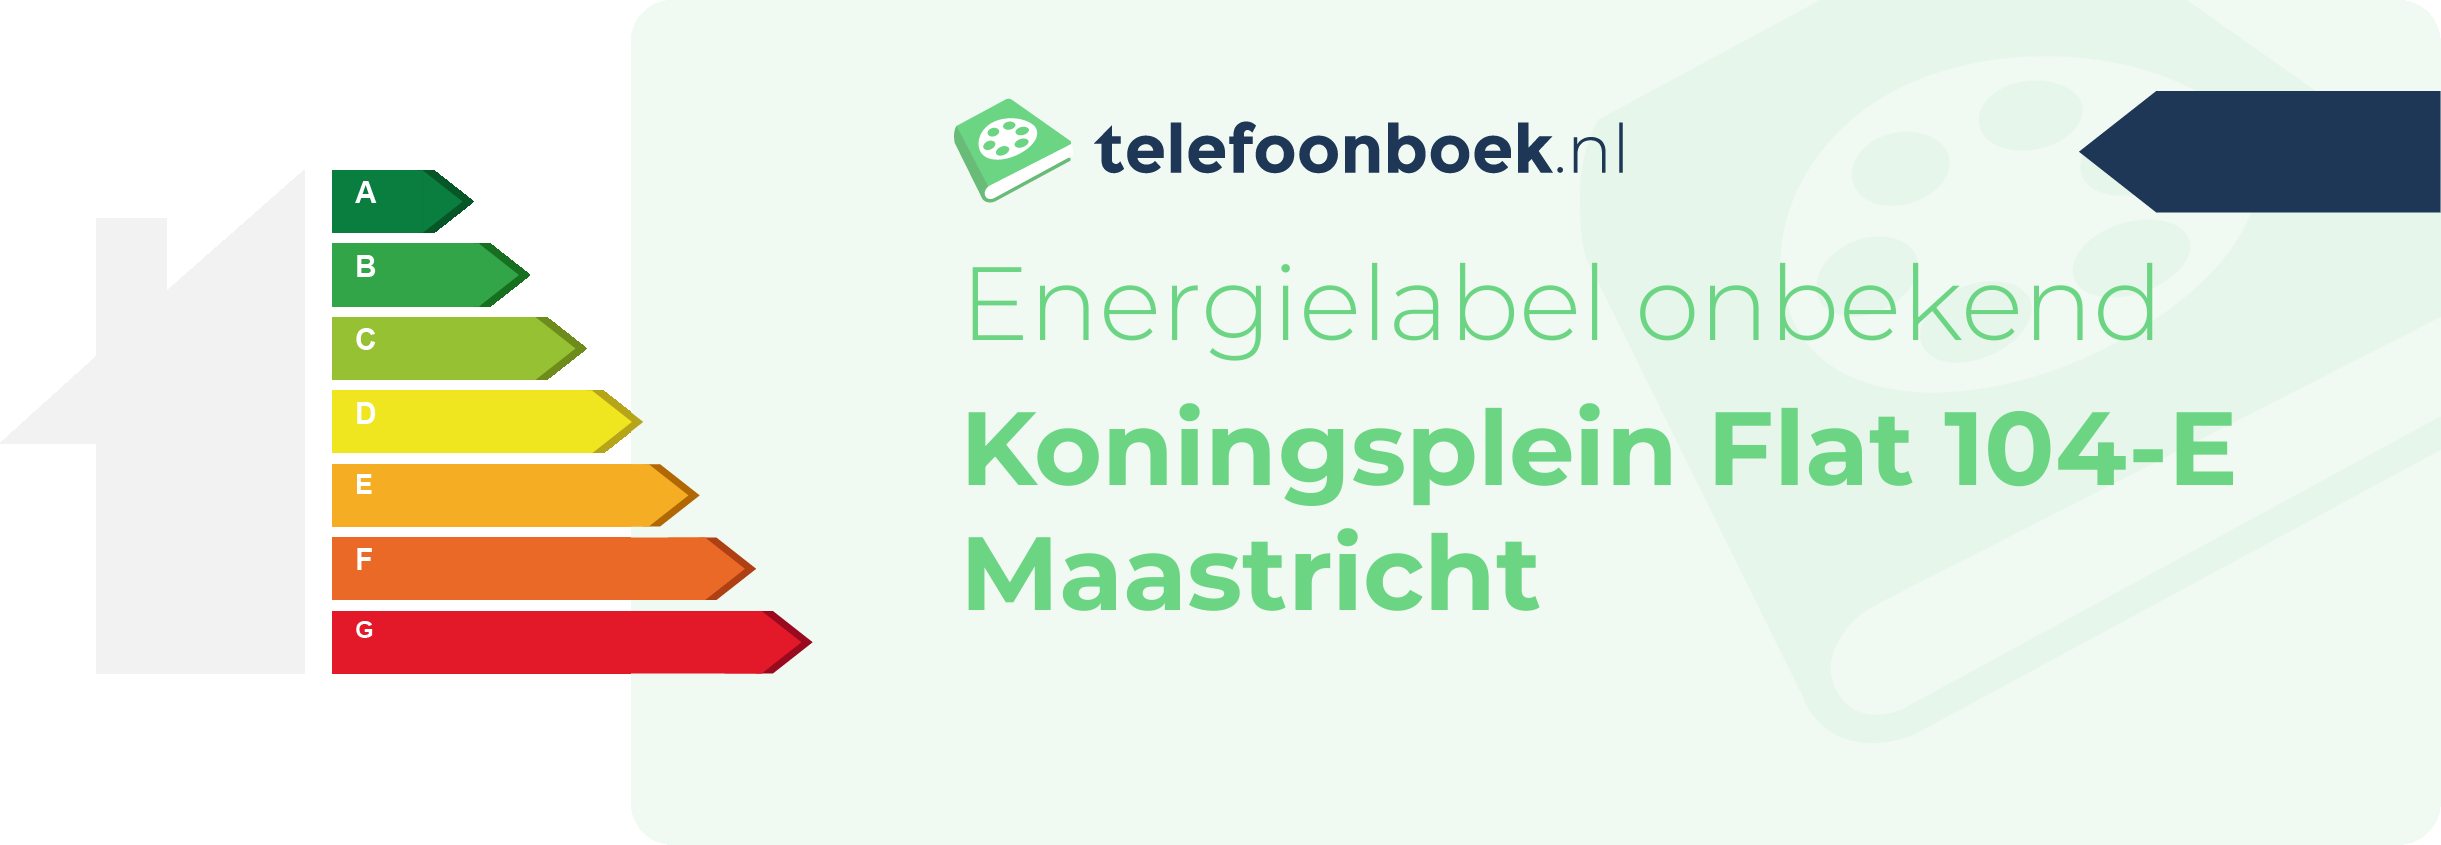 Energielabel Koningsplein Flat 104-E Maastricht